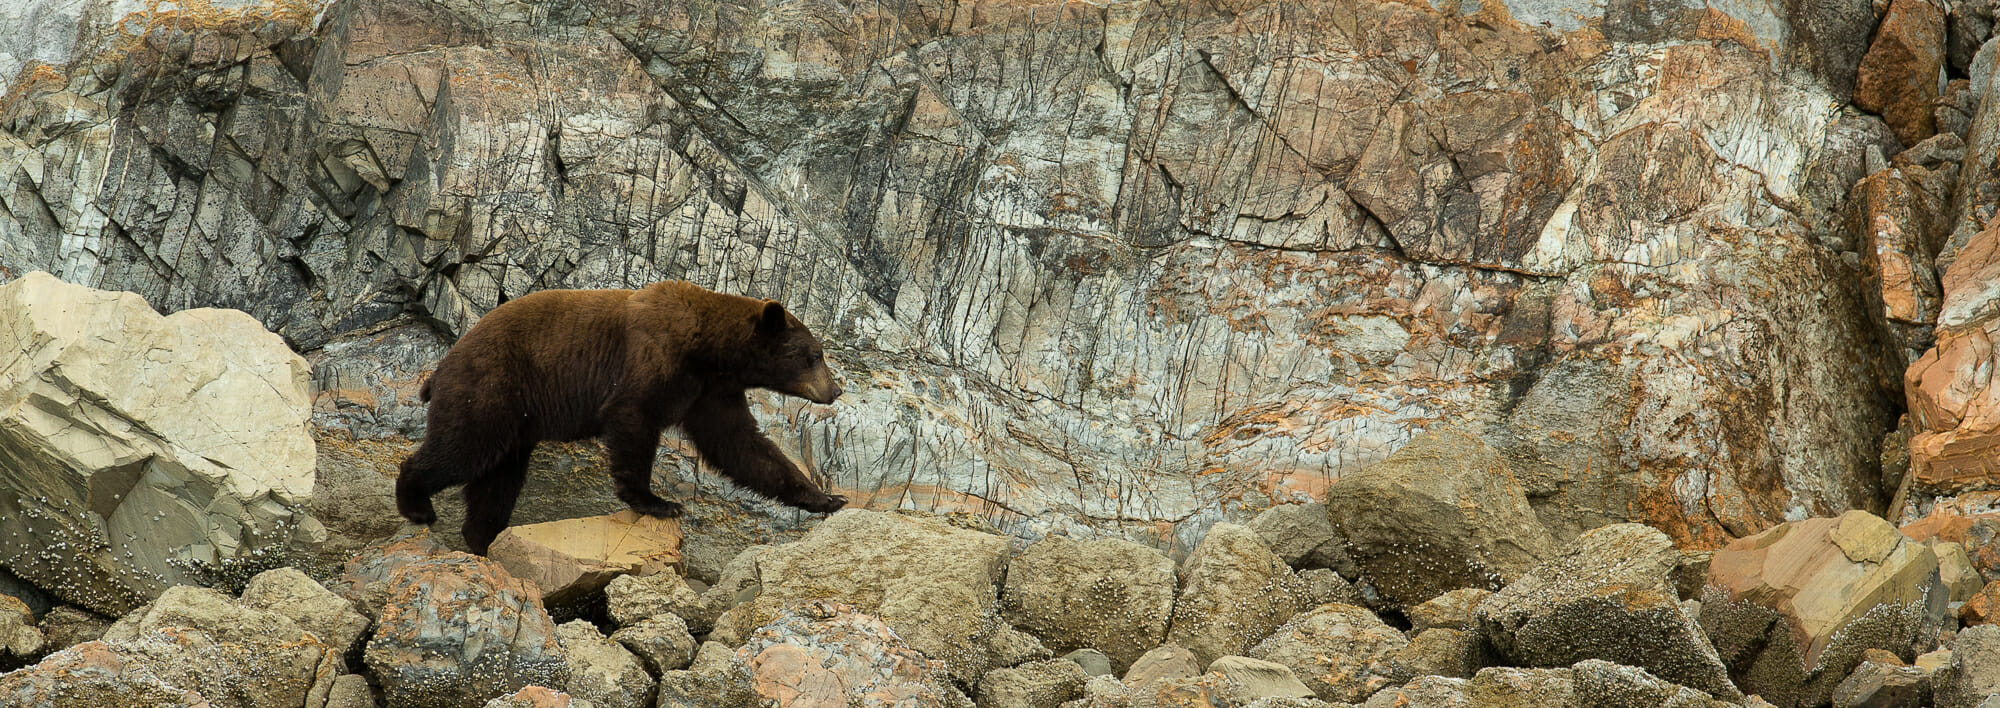 blackbear on the rocks in glacier bay. Mario Davalos photo